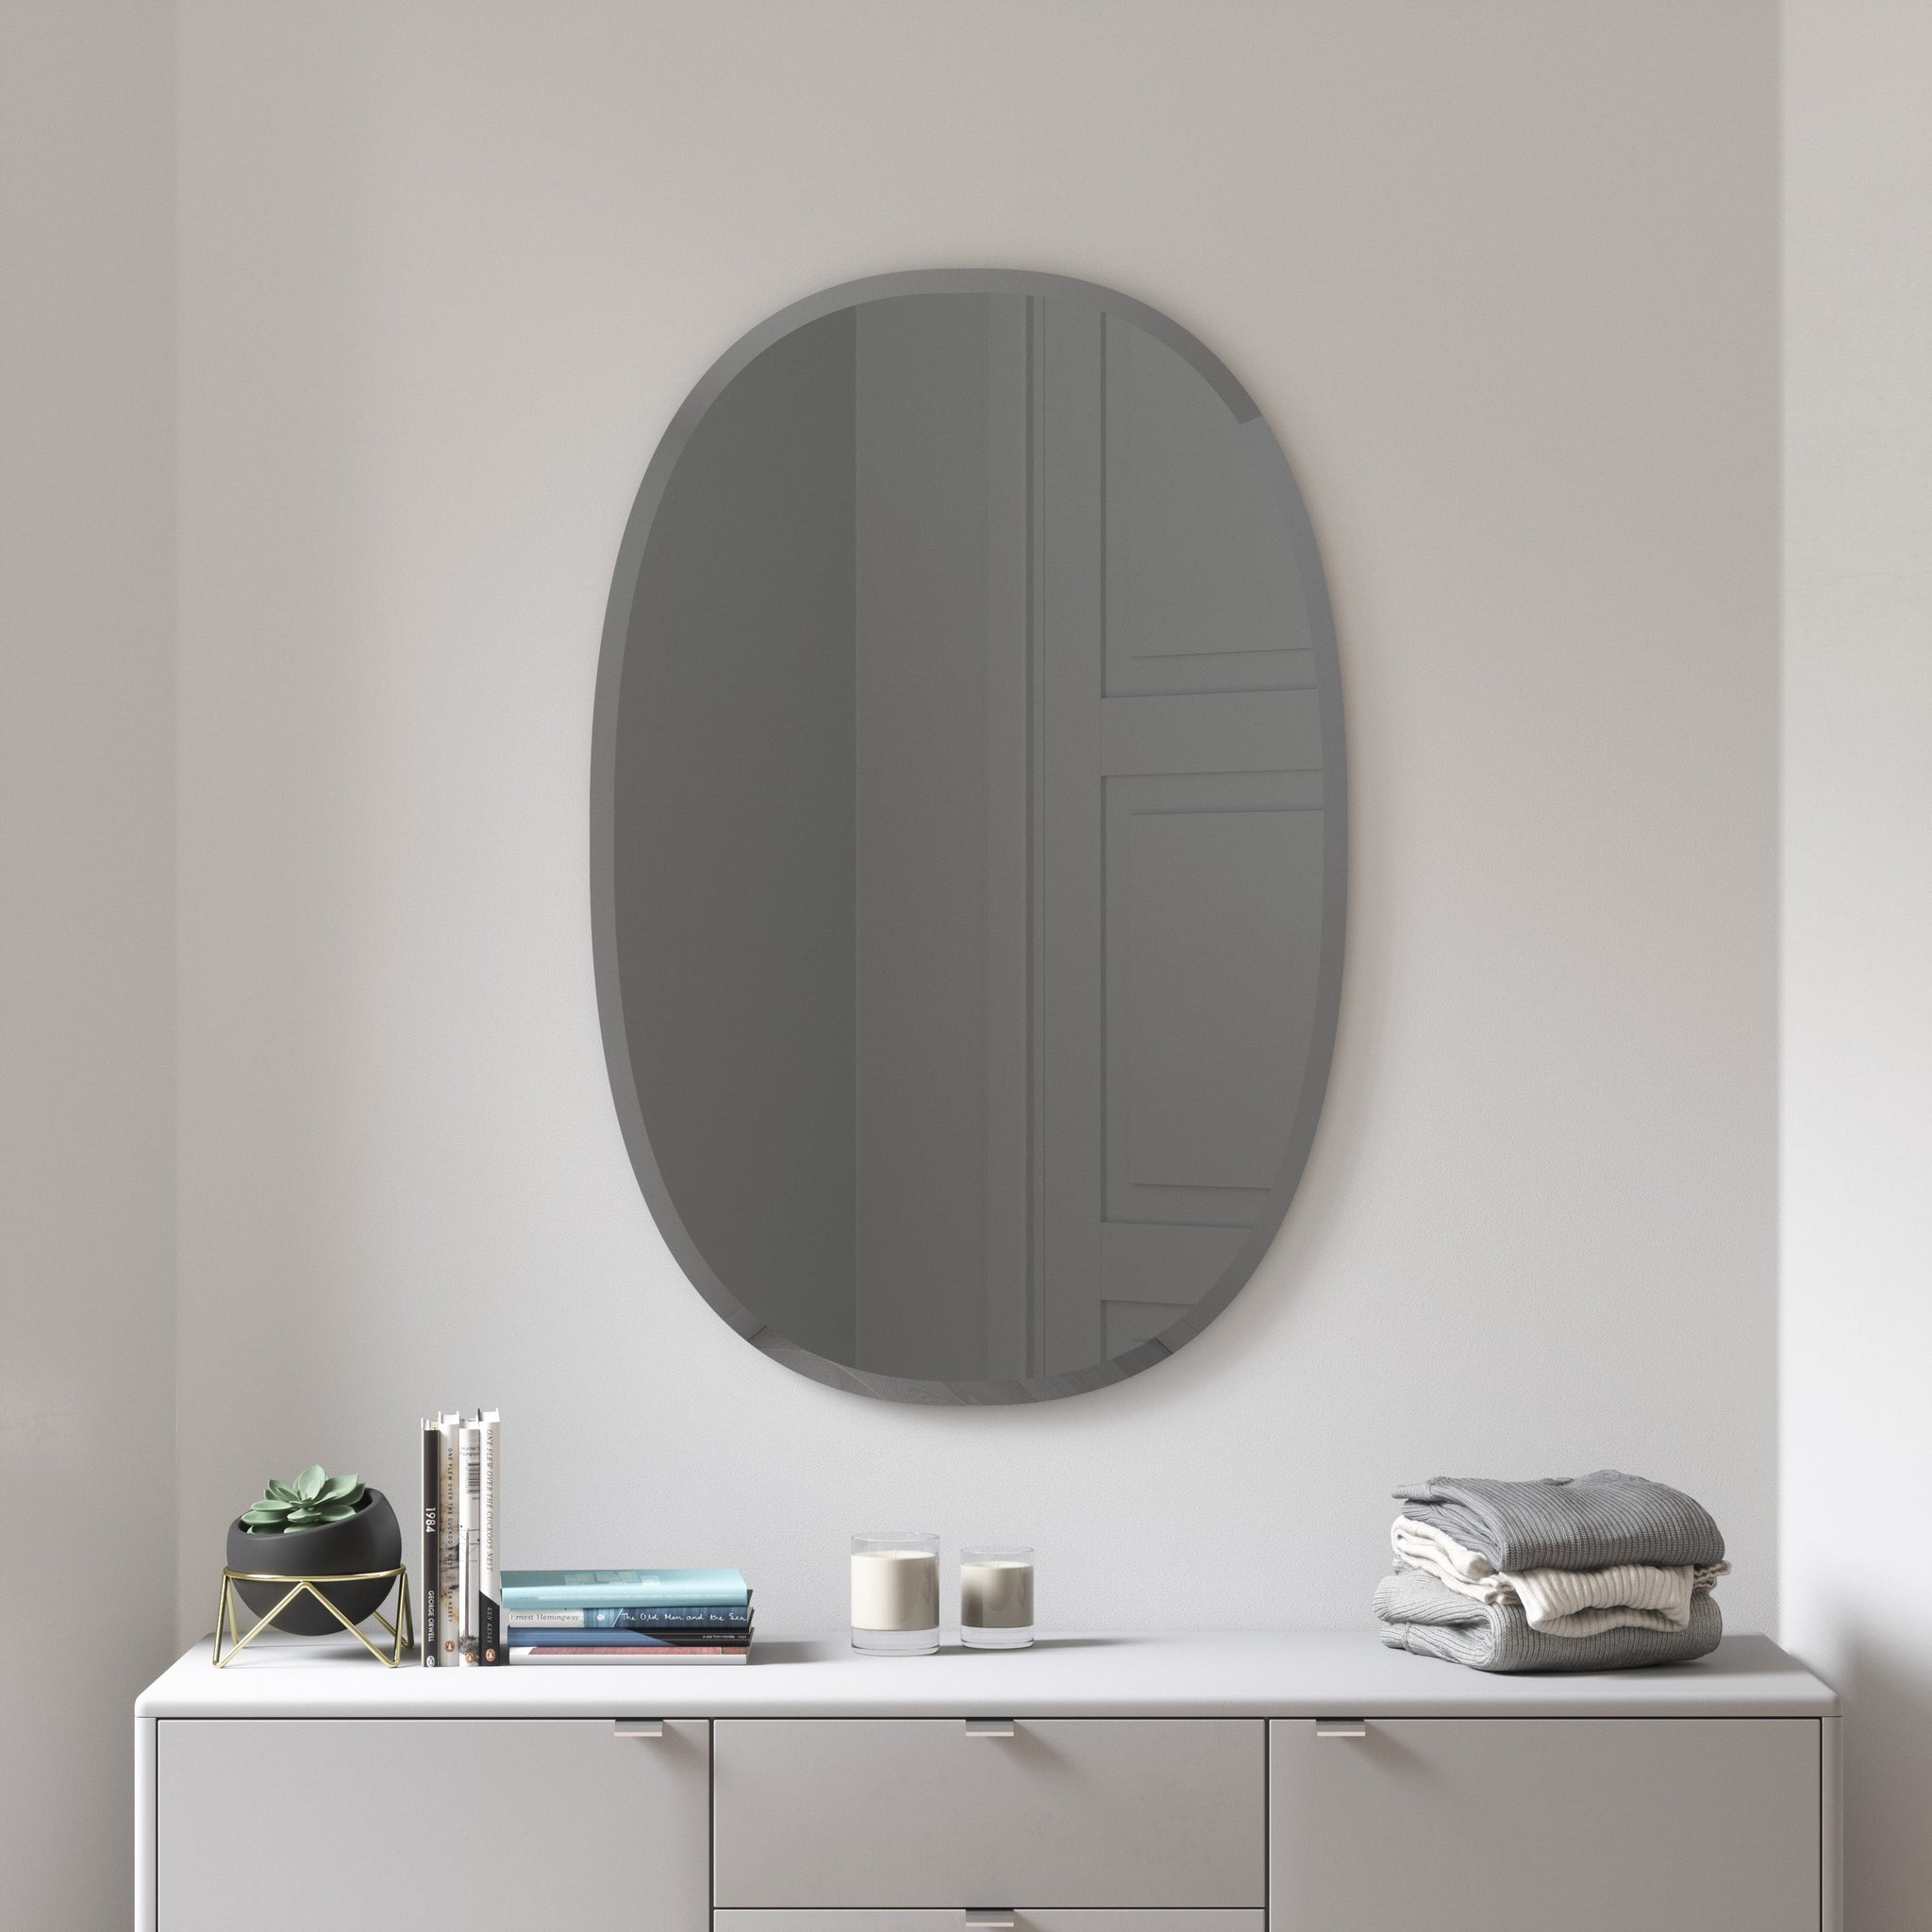 Beveled Oval Mirror